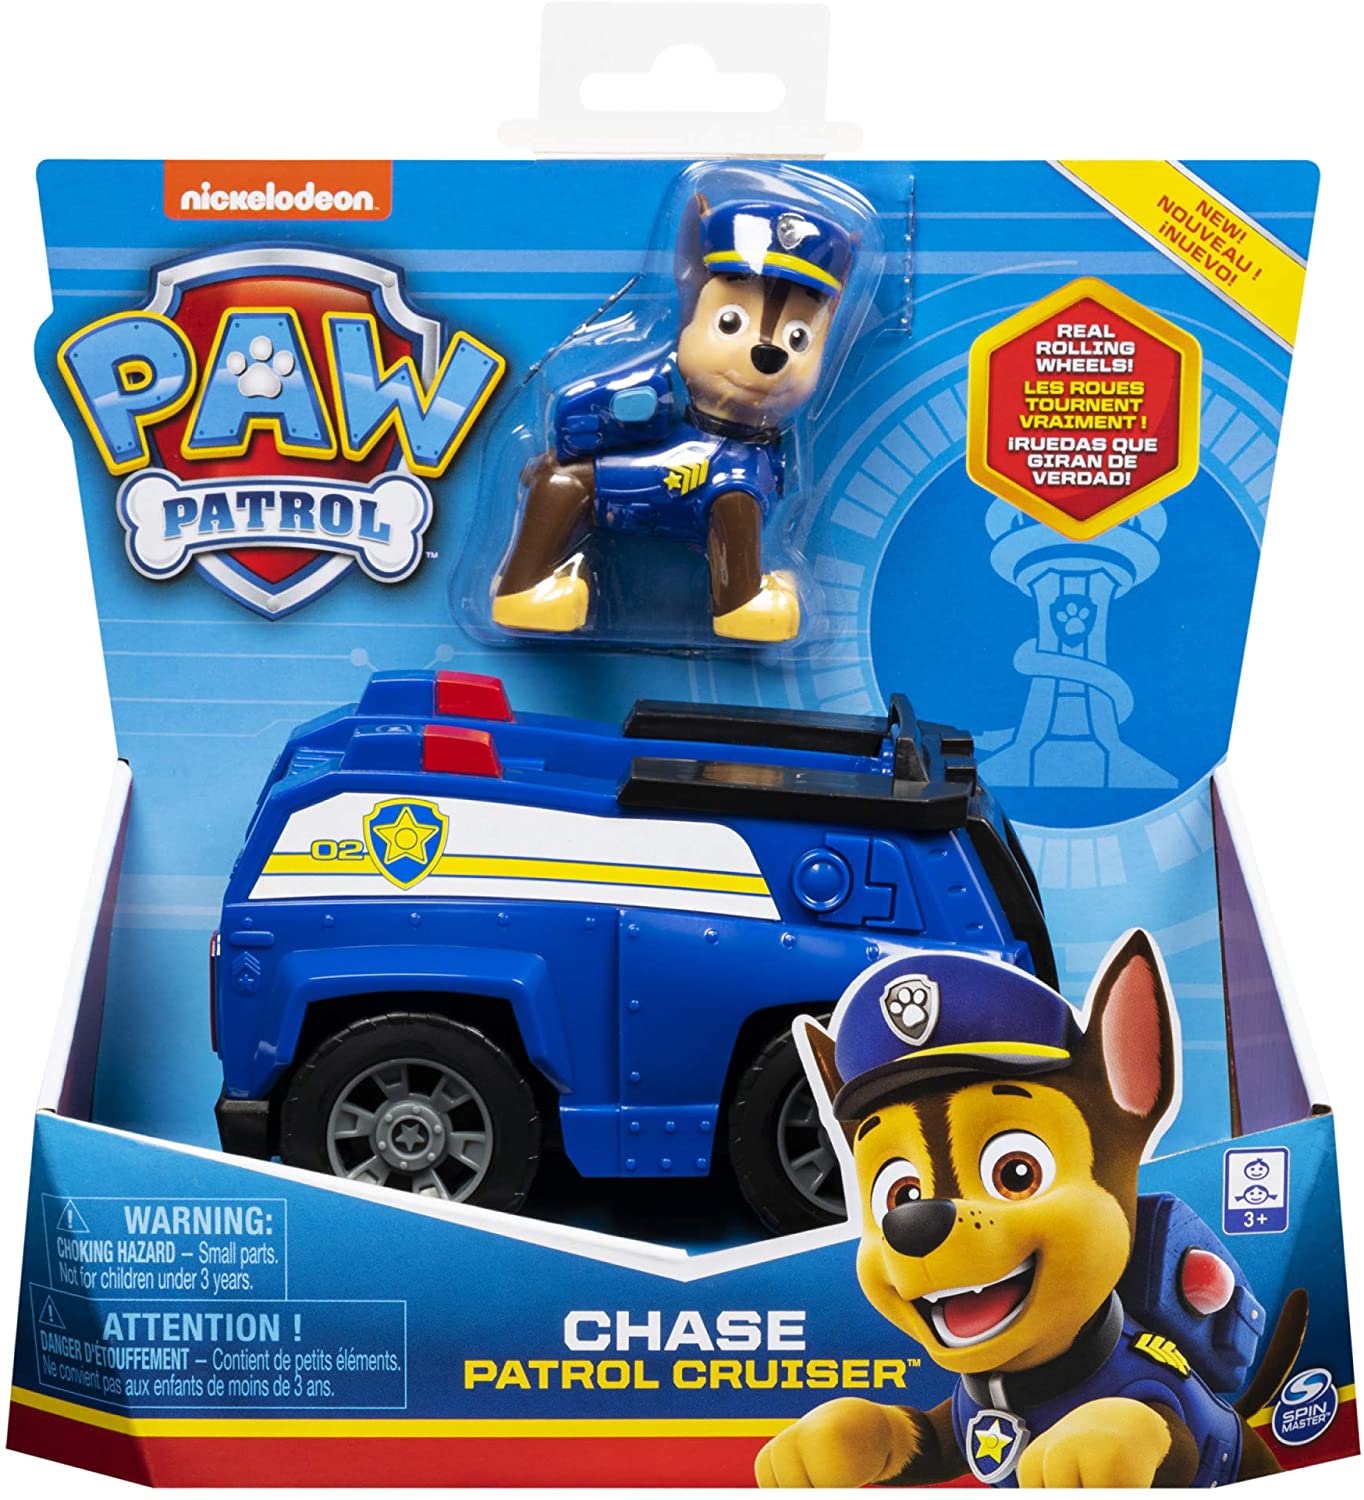 chase paw patrol figurine and vehicle